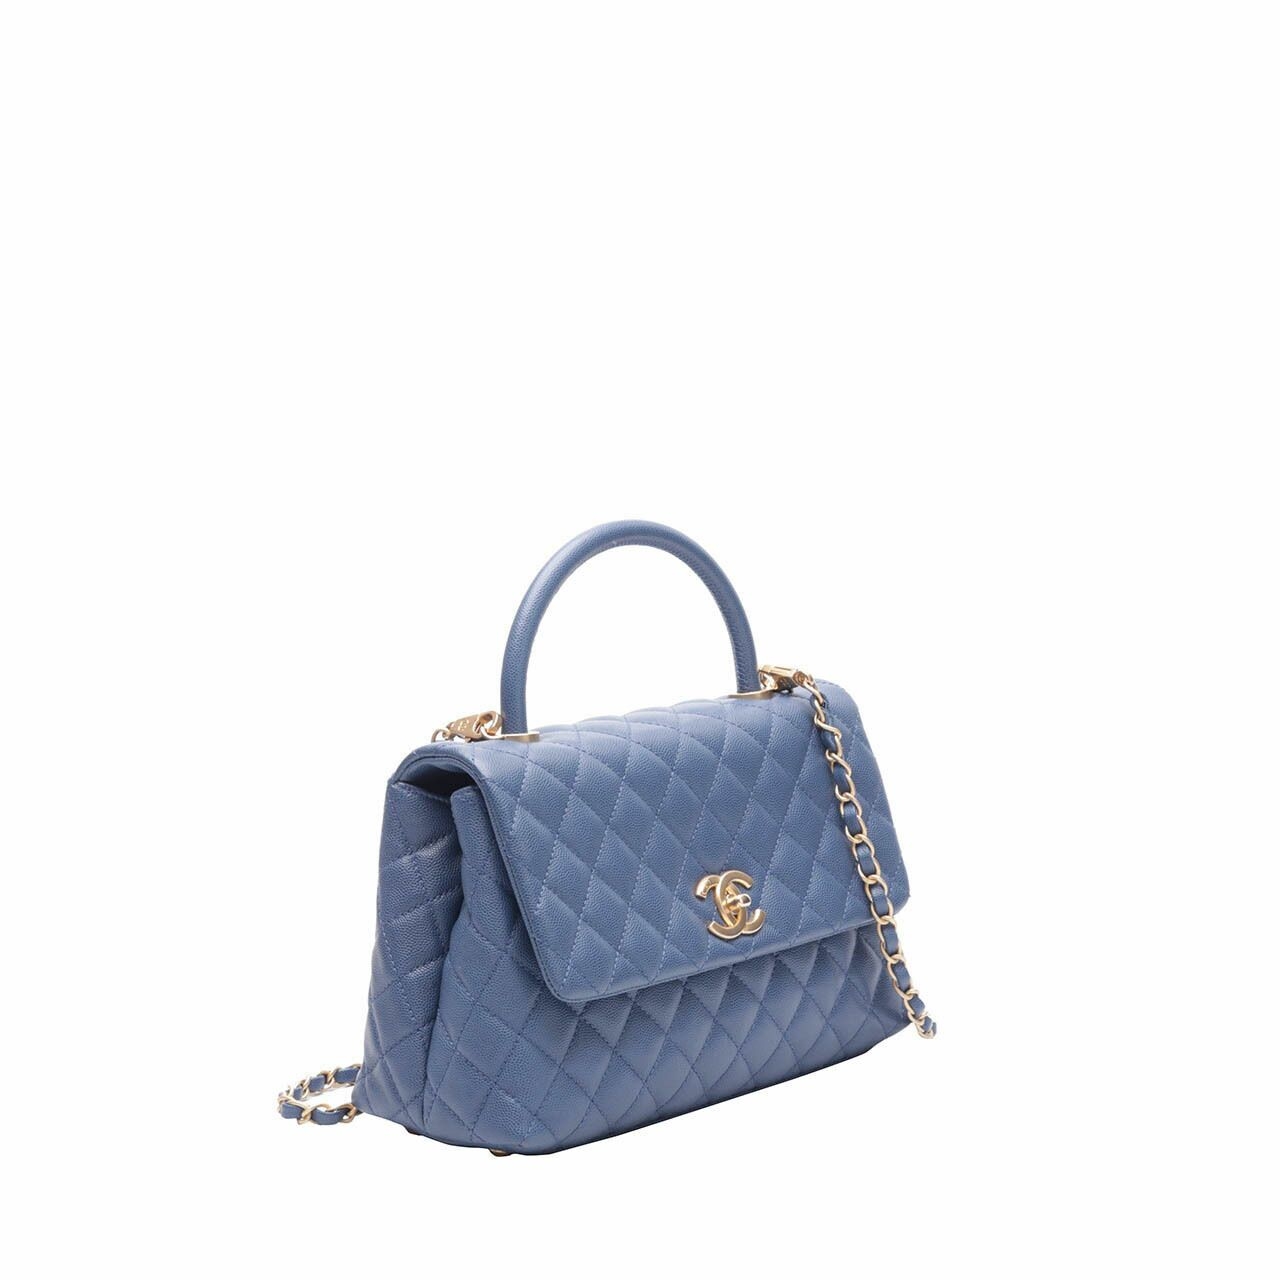 Chanel Coco Caviar Leather Blue Top Handle Satchel Bag